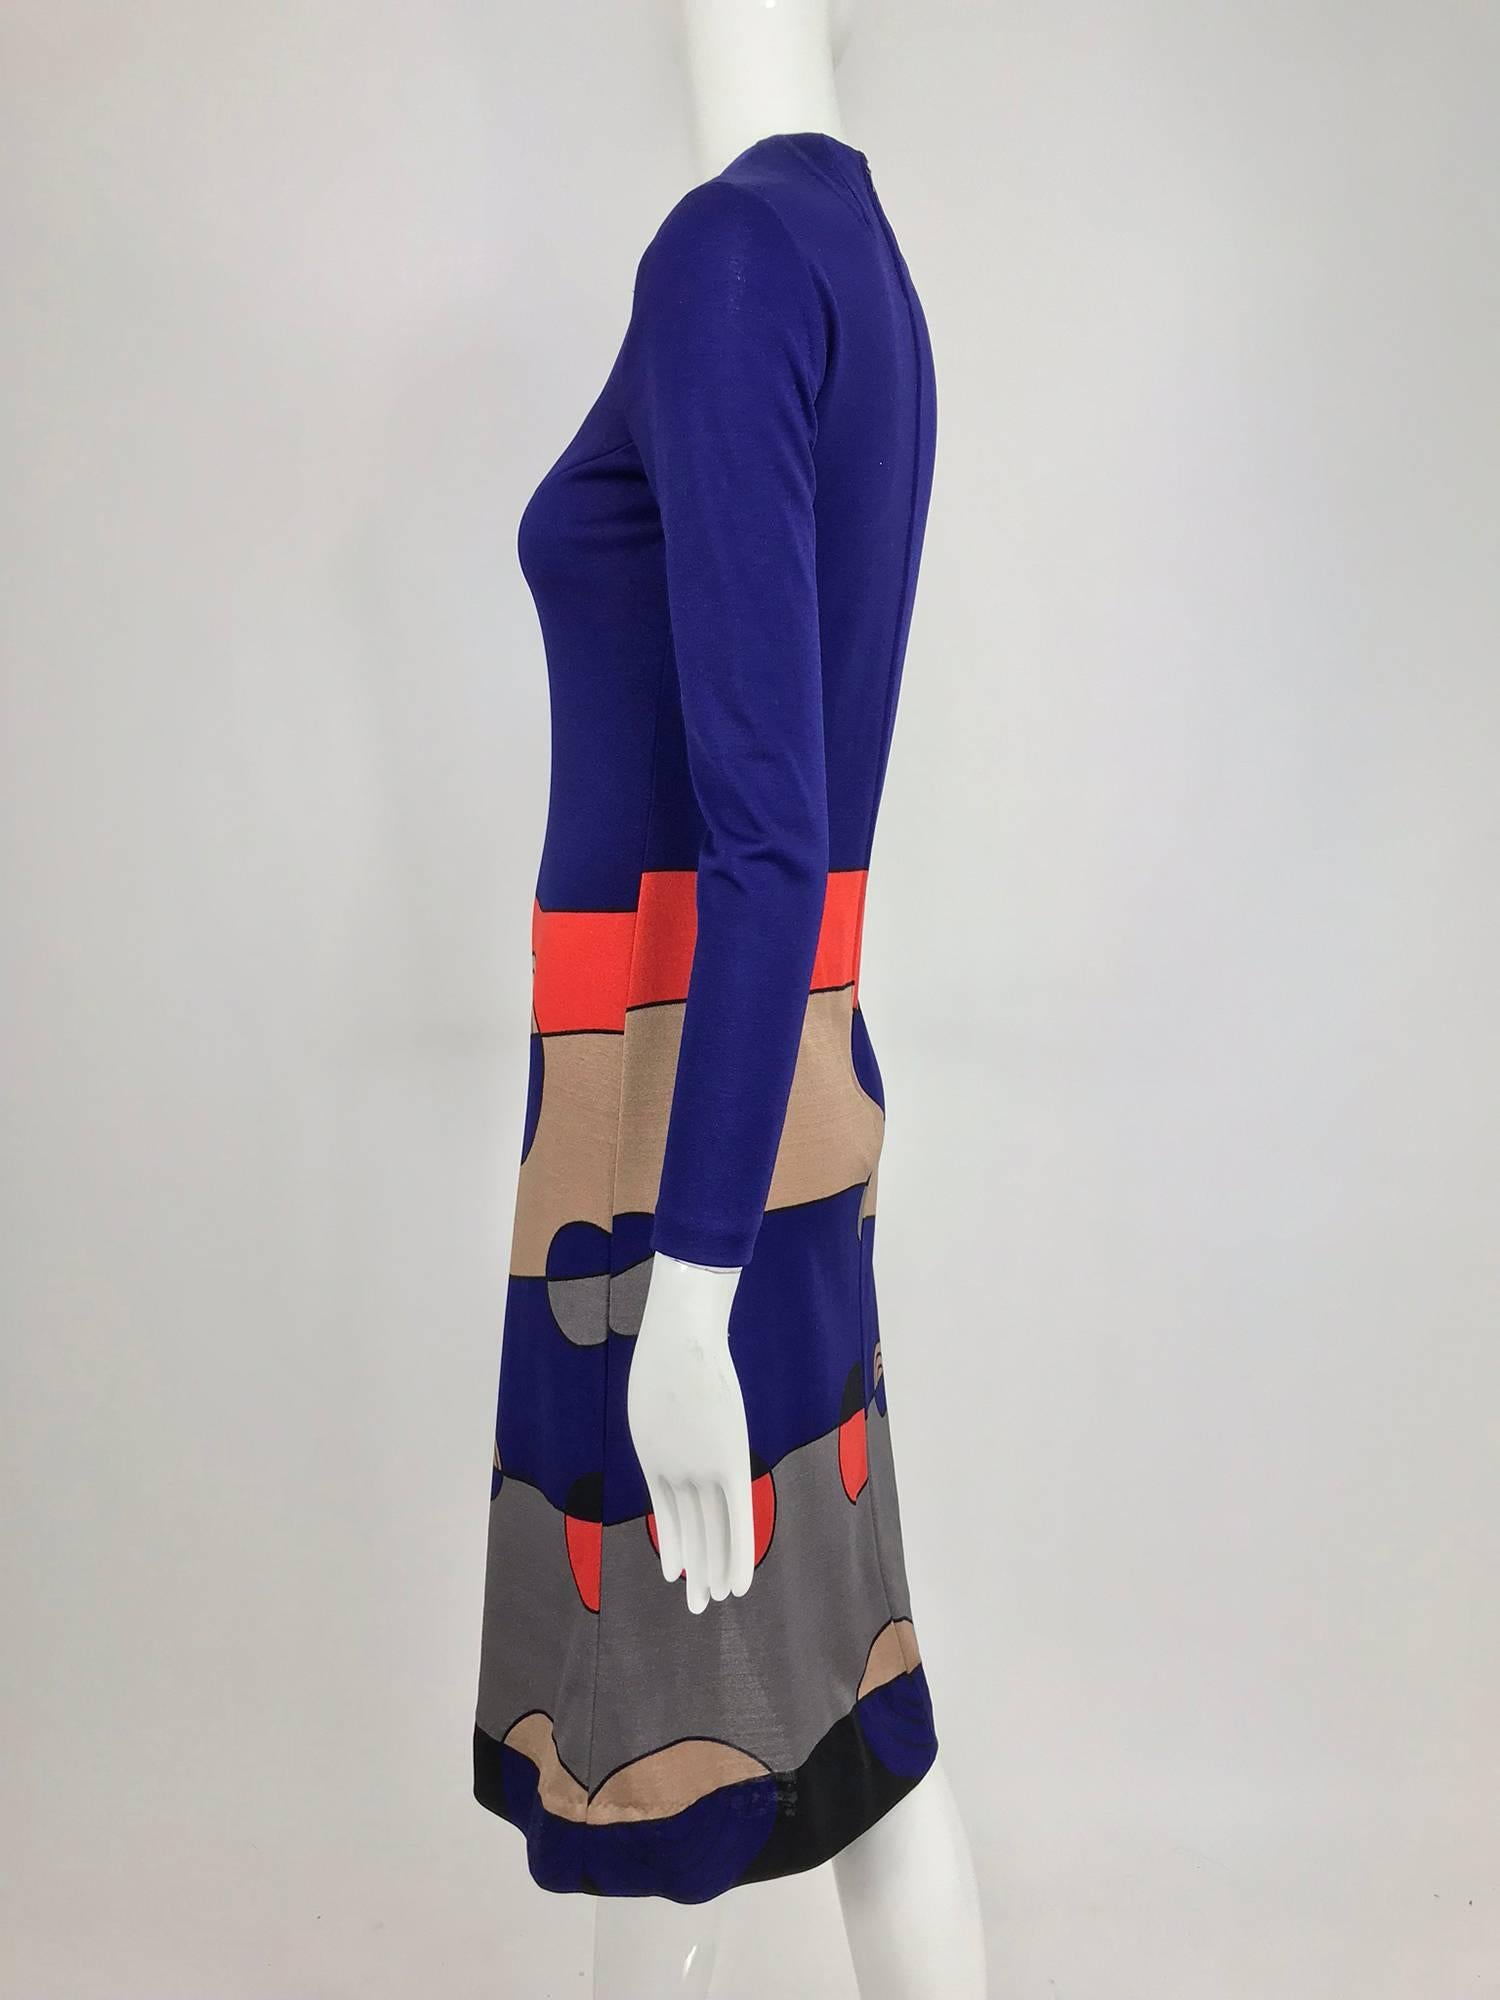 Women's Louis Feraud Op Art Mod print jersey dress 1960s 